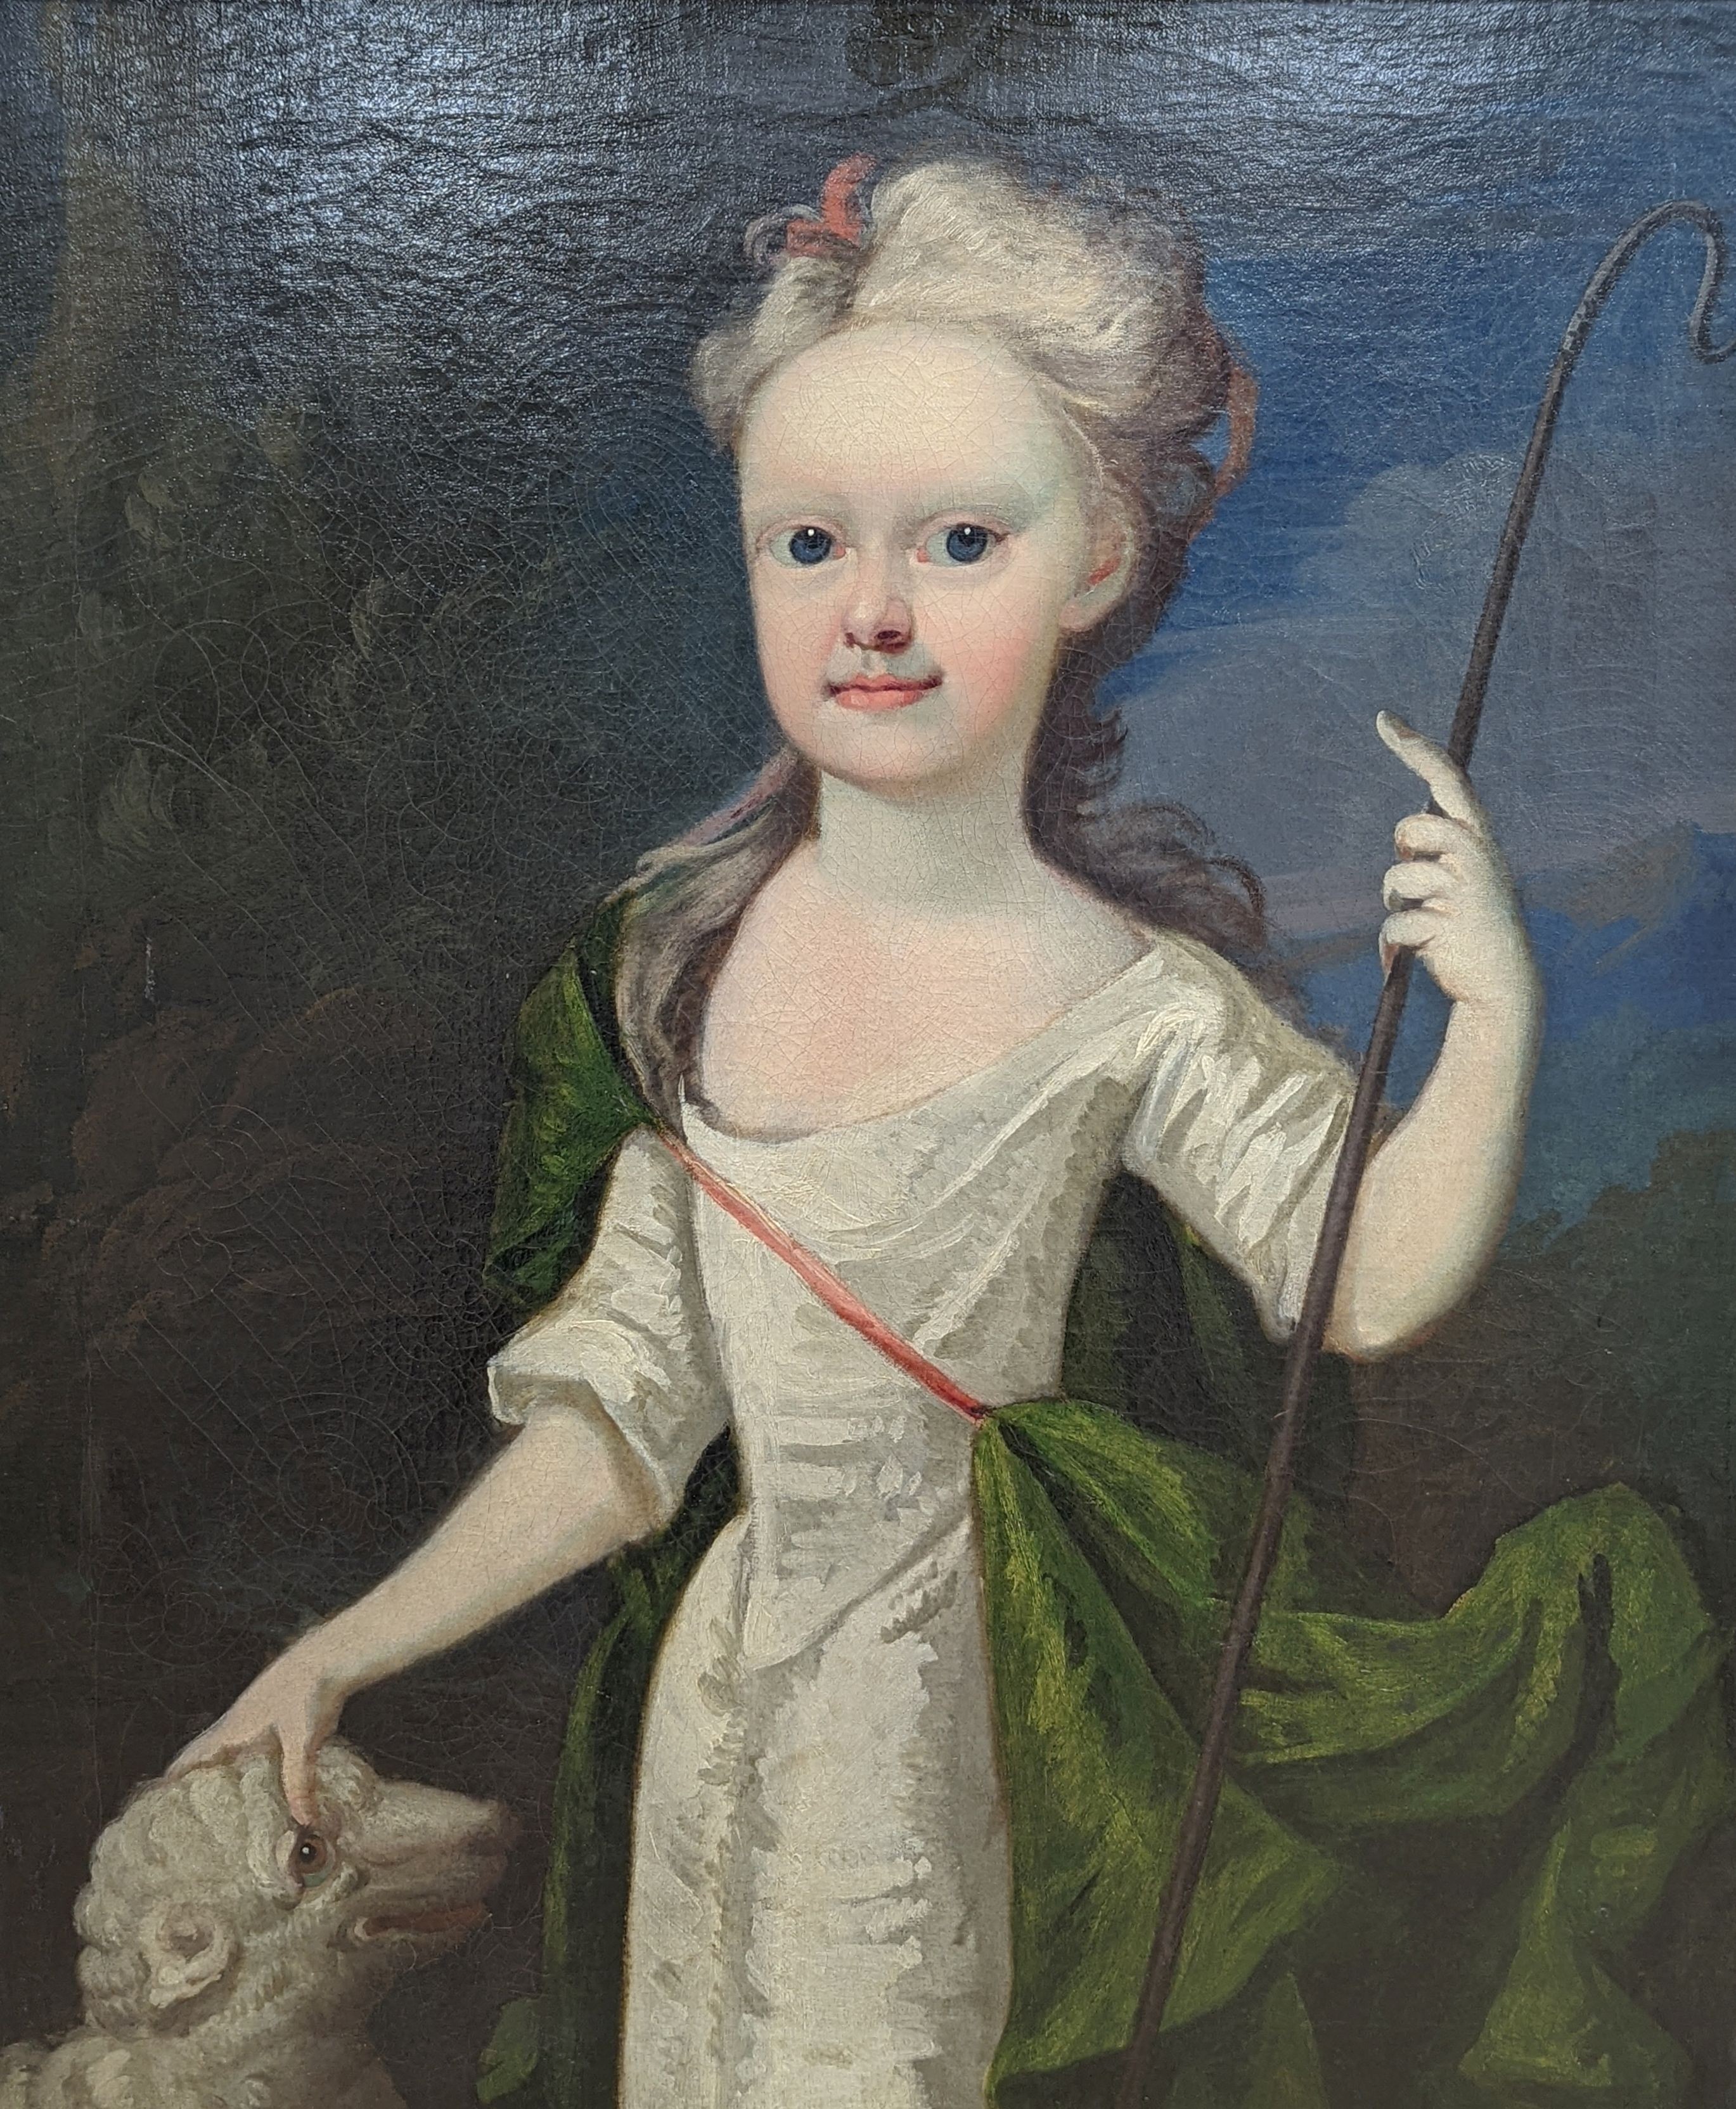 Early 18th century English School, oil on canvas, Portrait of a girl as a shepherdess, 74 x 62cm